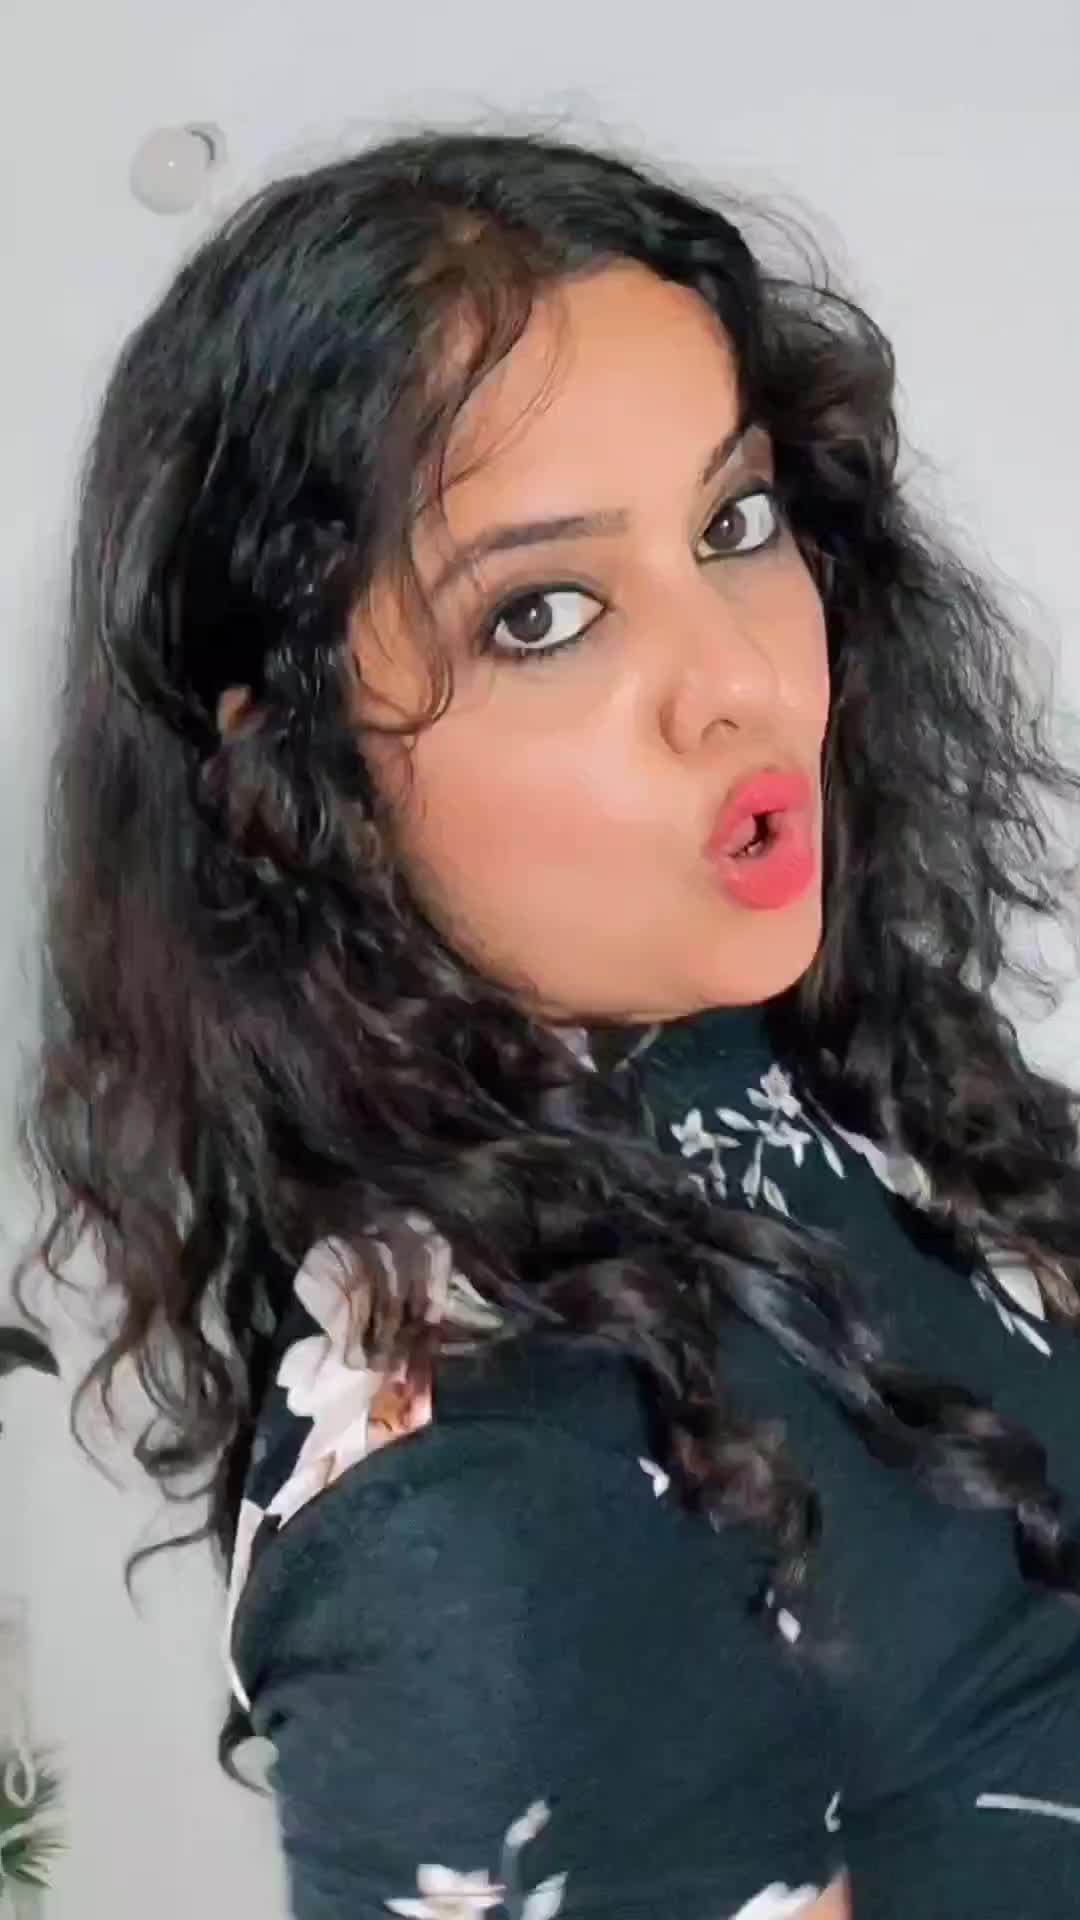 Ankhiyan Farebi shaitani hai
#takataktrending #viral #featureme #queenrajni